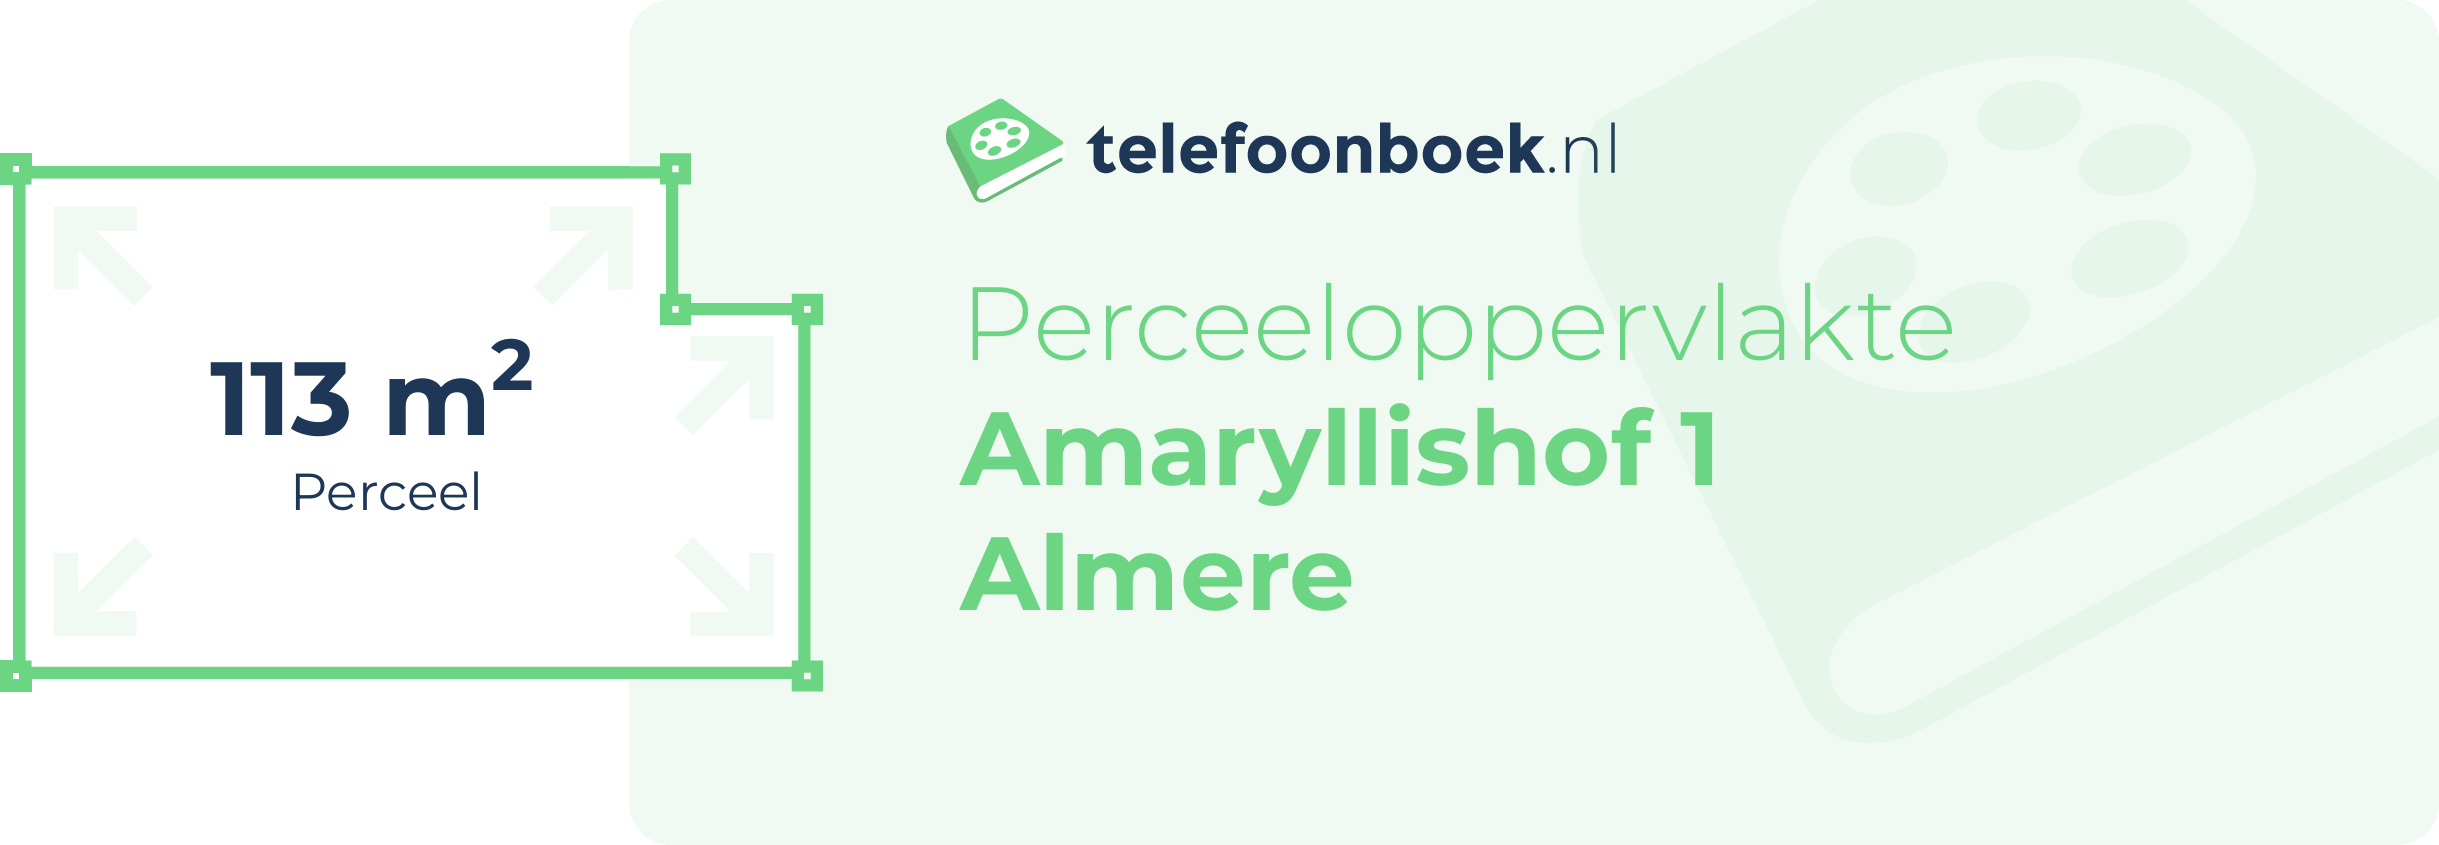 Perceeloppervlakte Amaryllishof 1 Almere